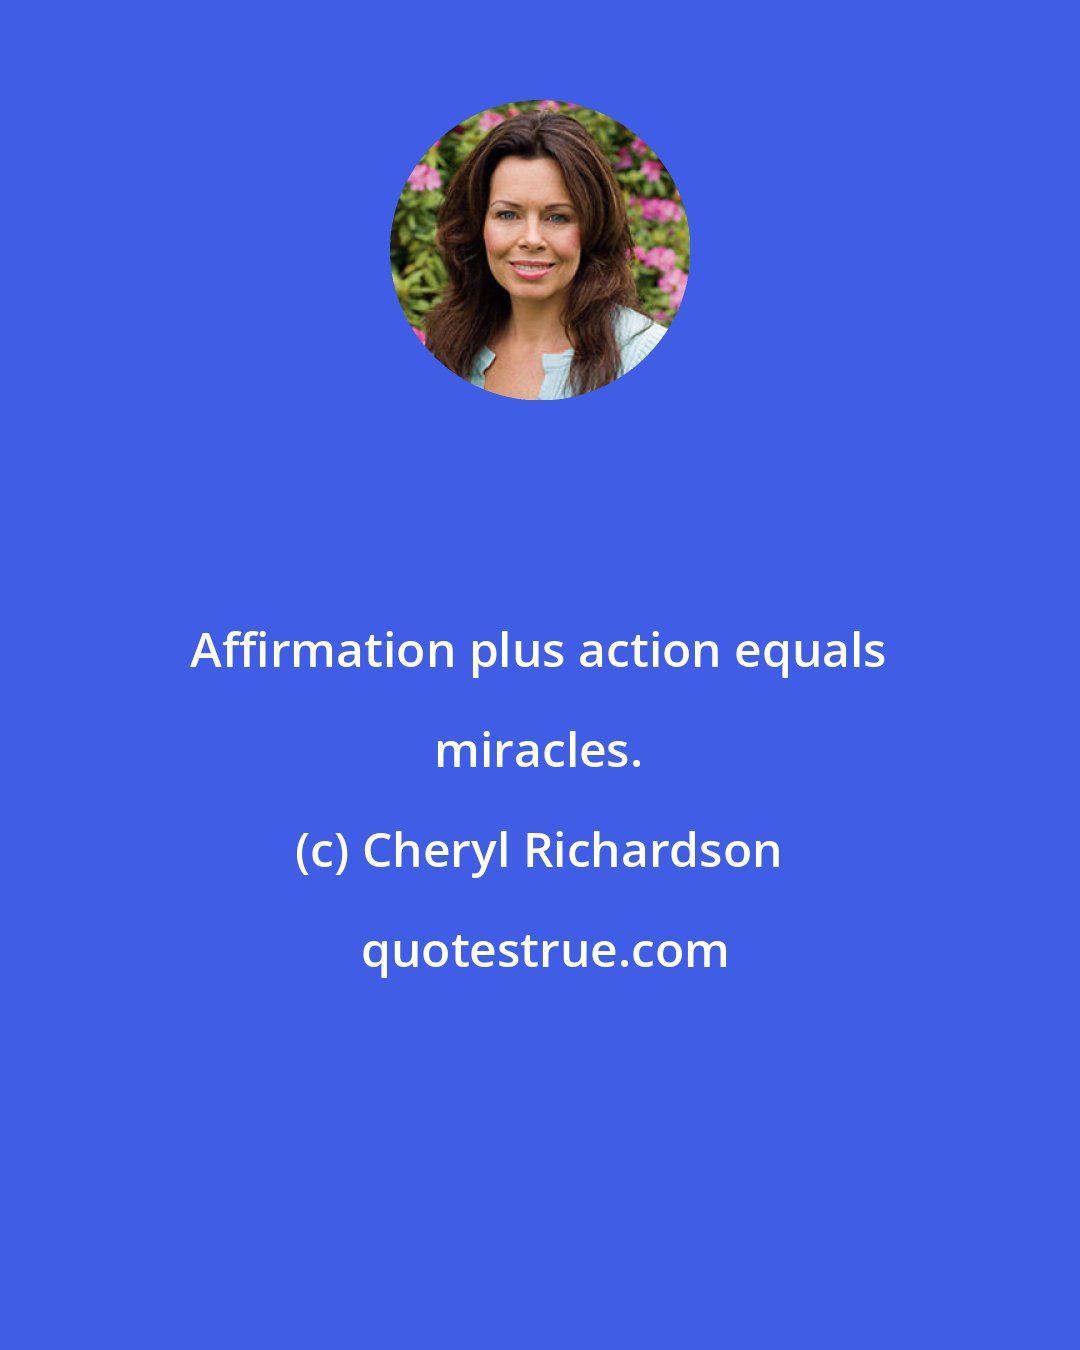 Cheryl Richardson: Affirmation plus action equals miracles.